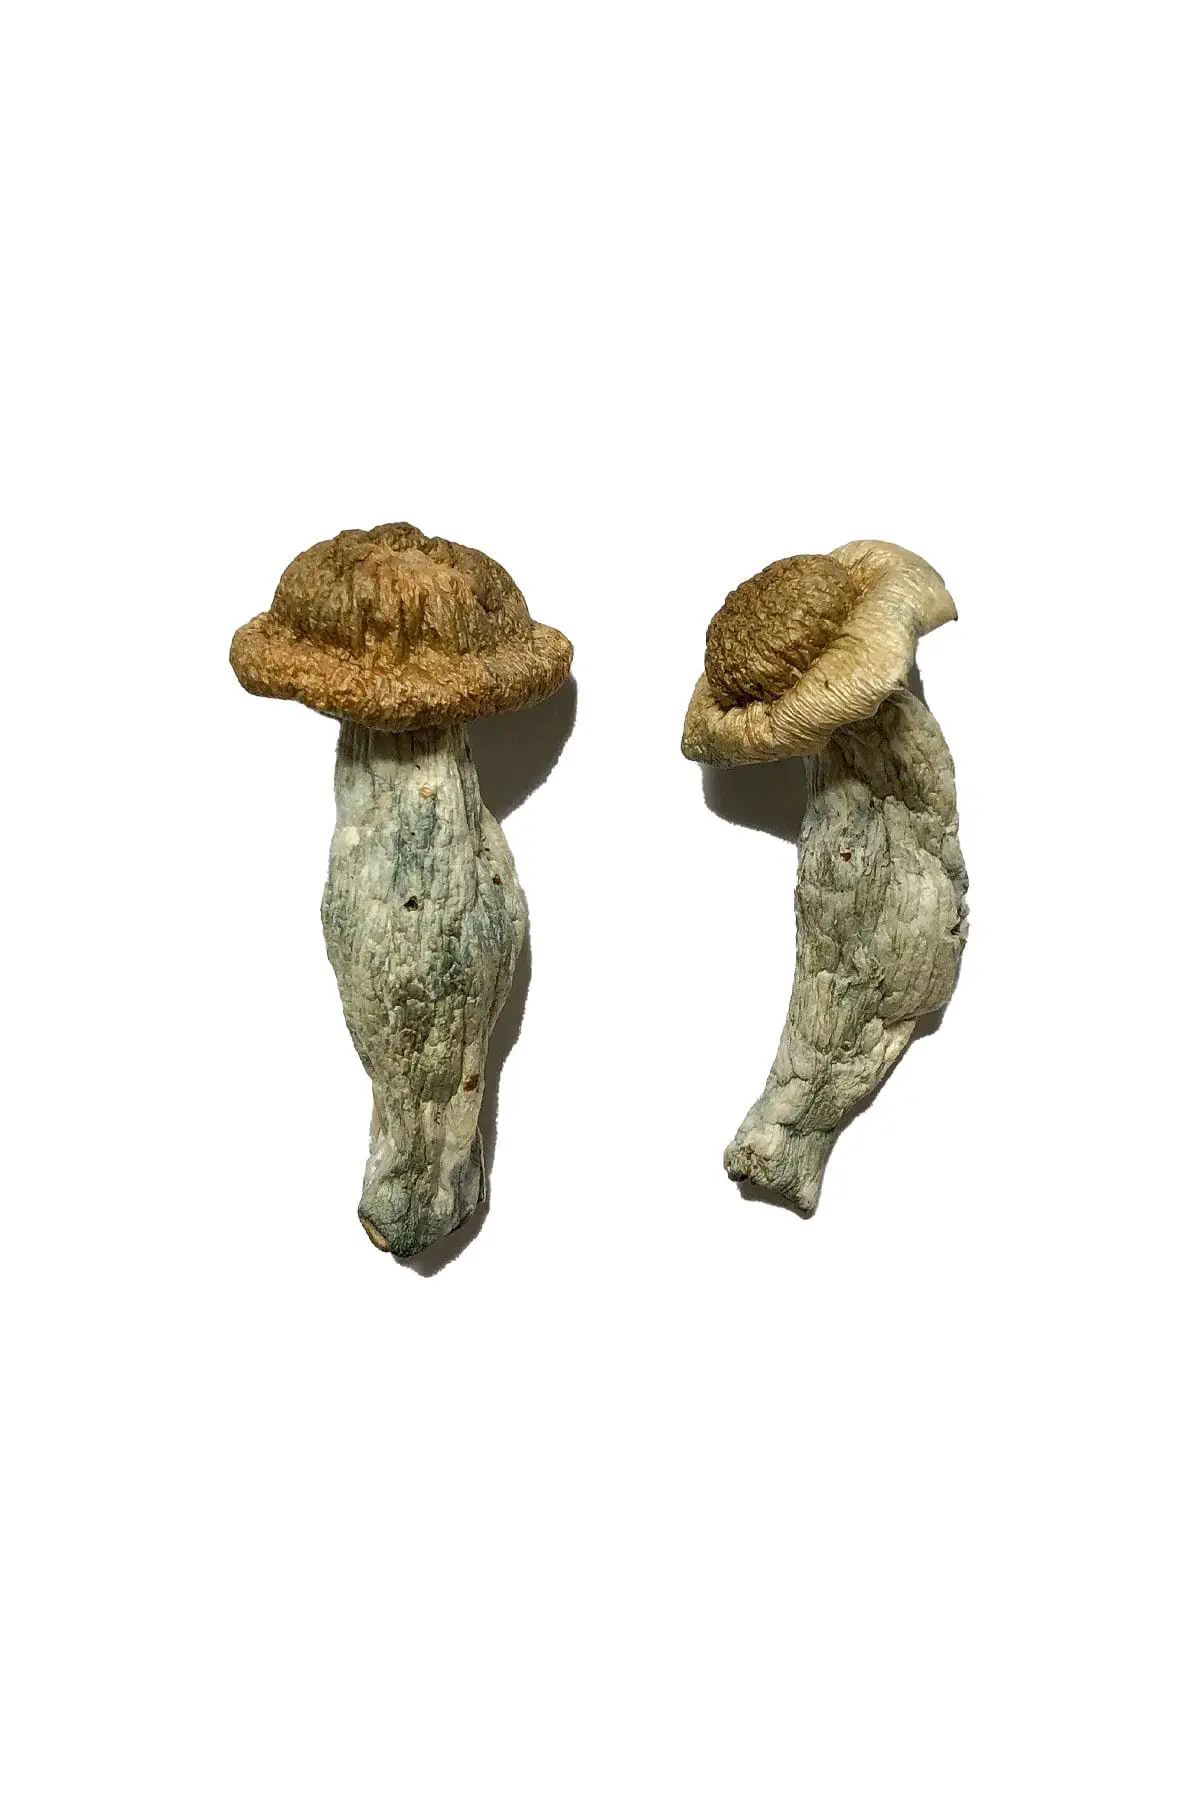 Sheperds Penis Envy Magic Mushrooms